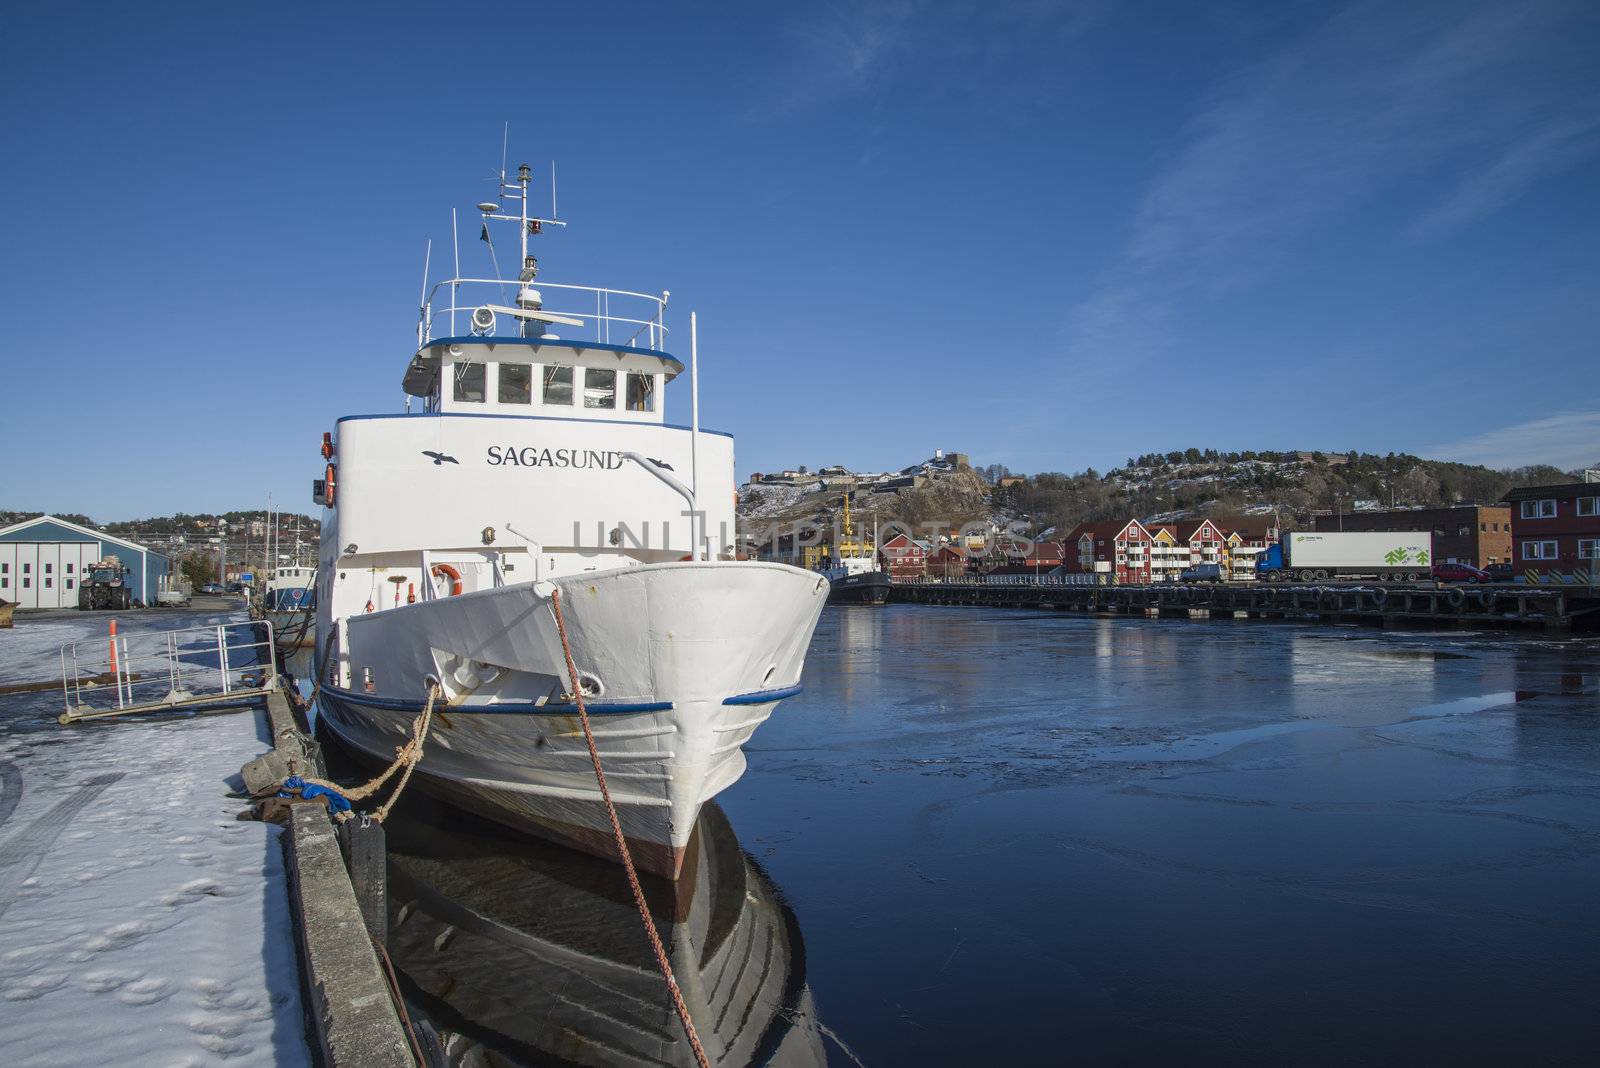 mv sagasund (moored to the quay) by steirus